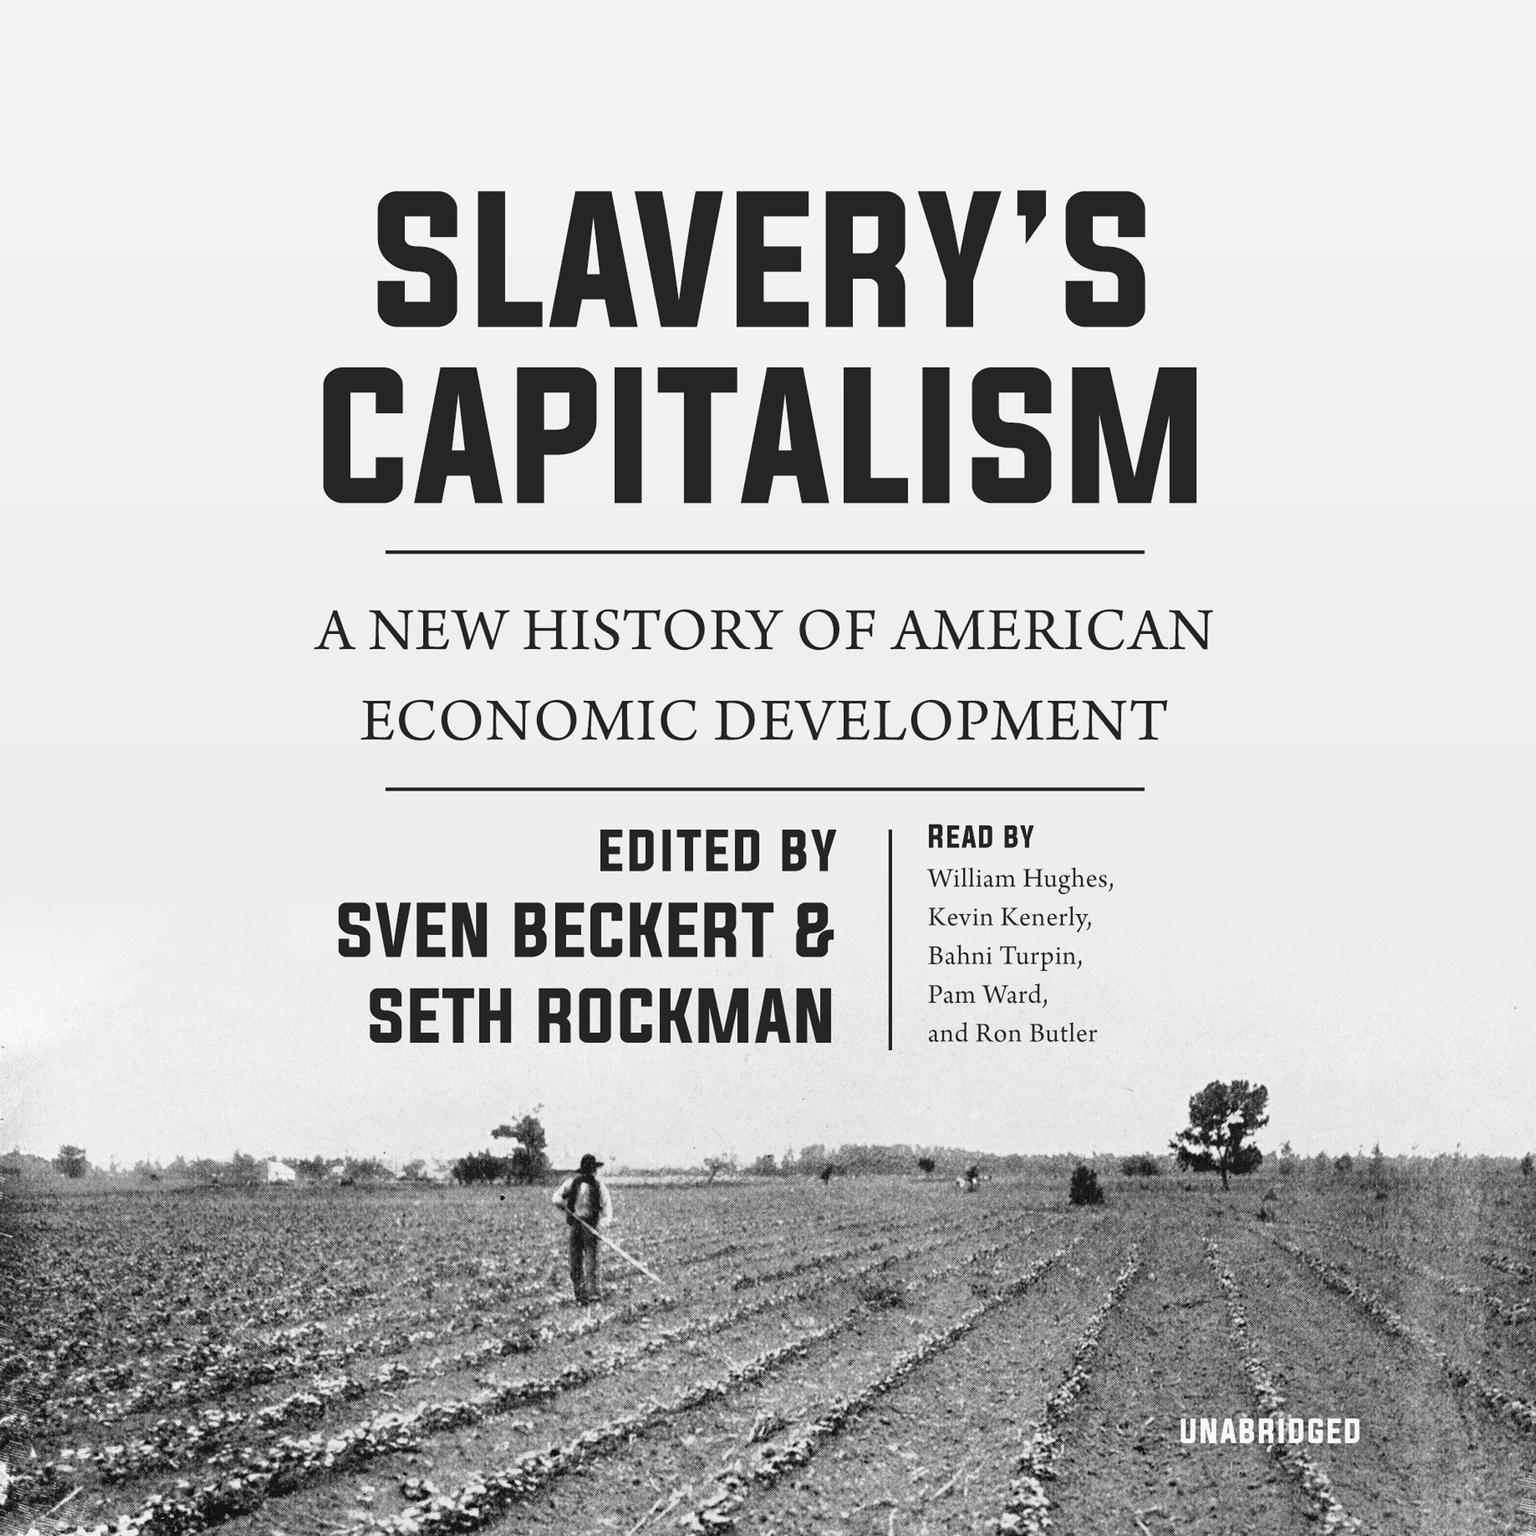 Slavery’s Capitalism: A New History of American Economic Development Audiobook, by Sven Beckert